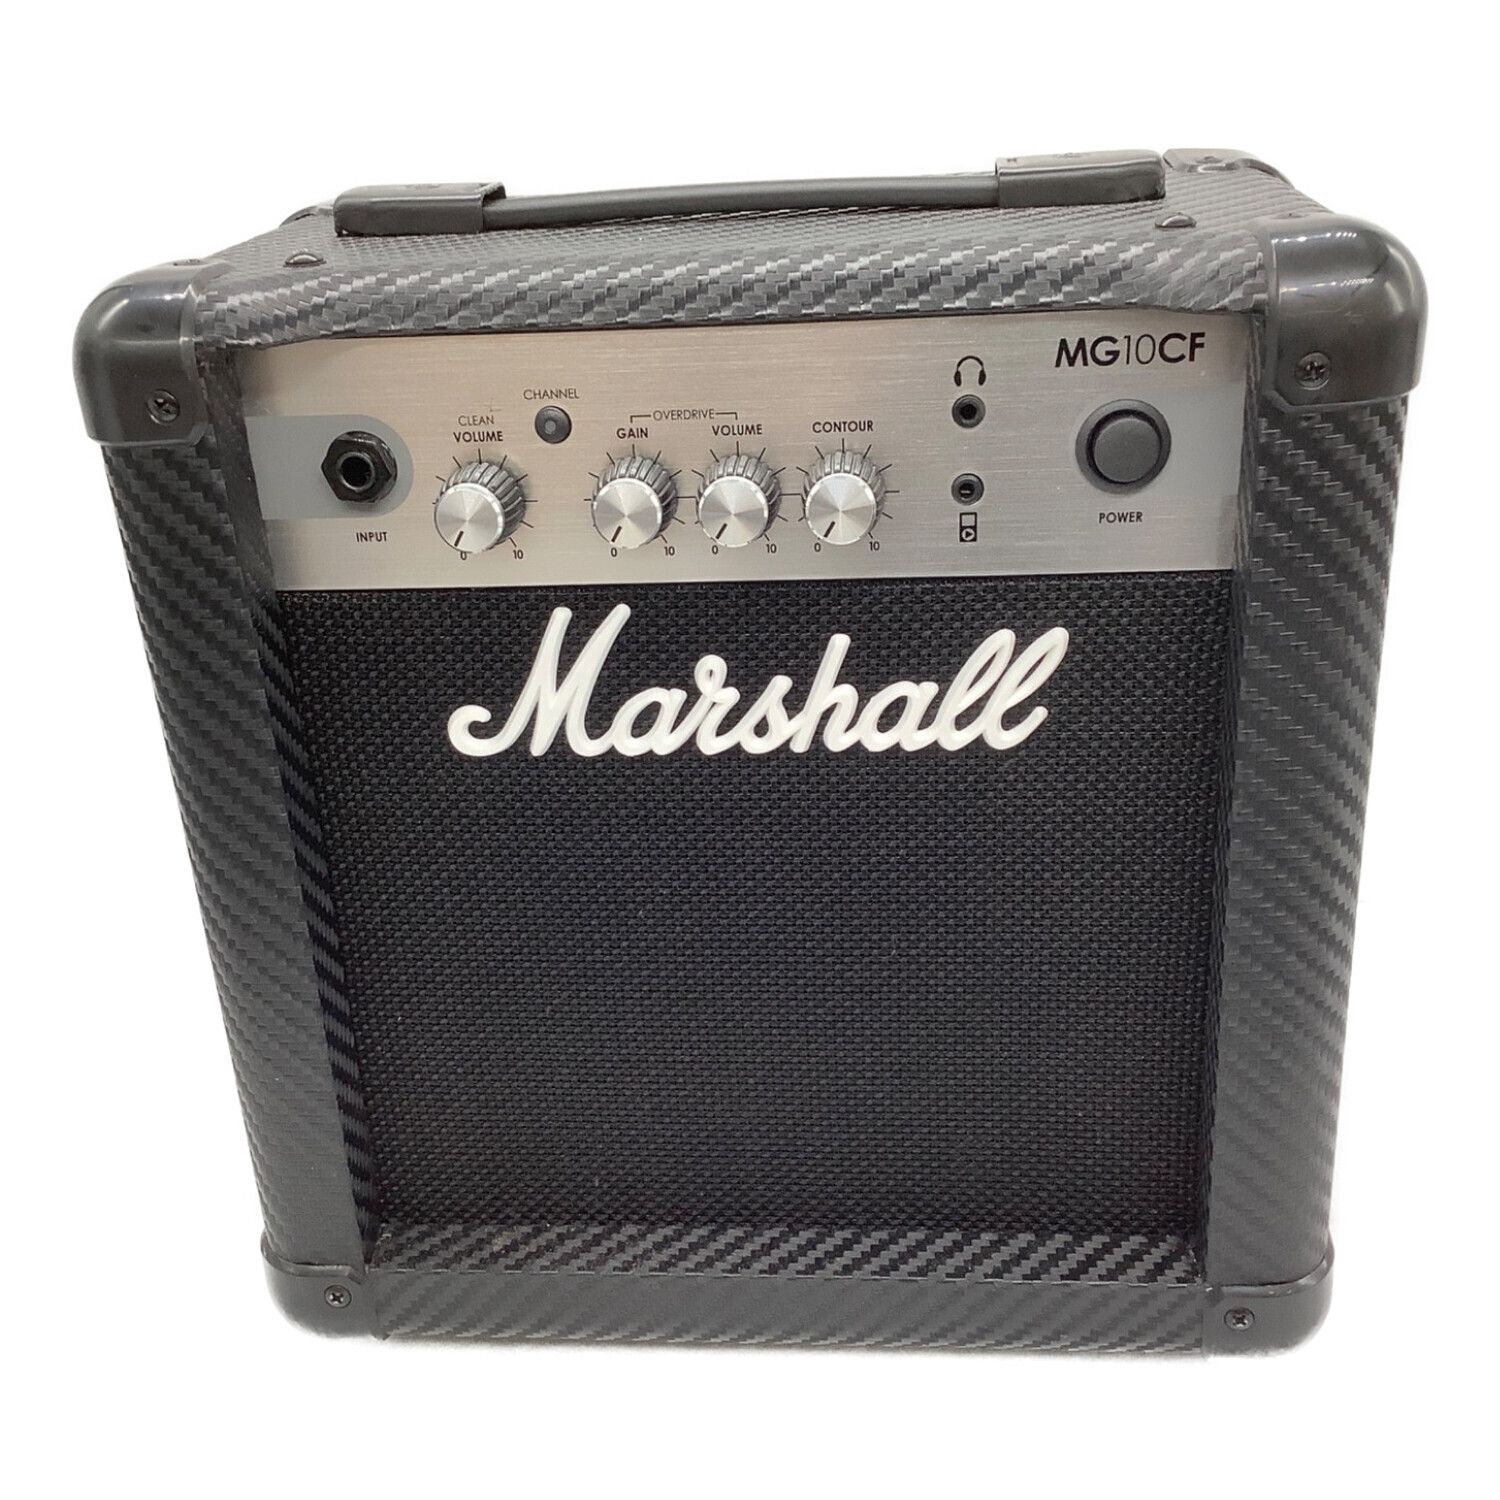 Marshall mg10cf マーシャル ギターアンプ